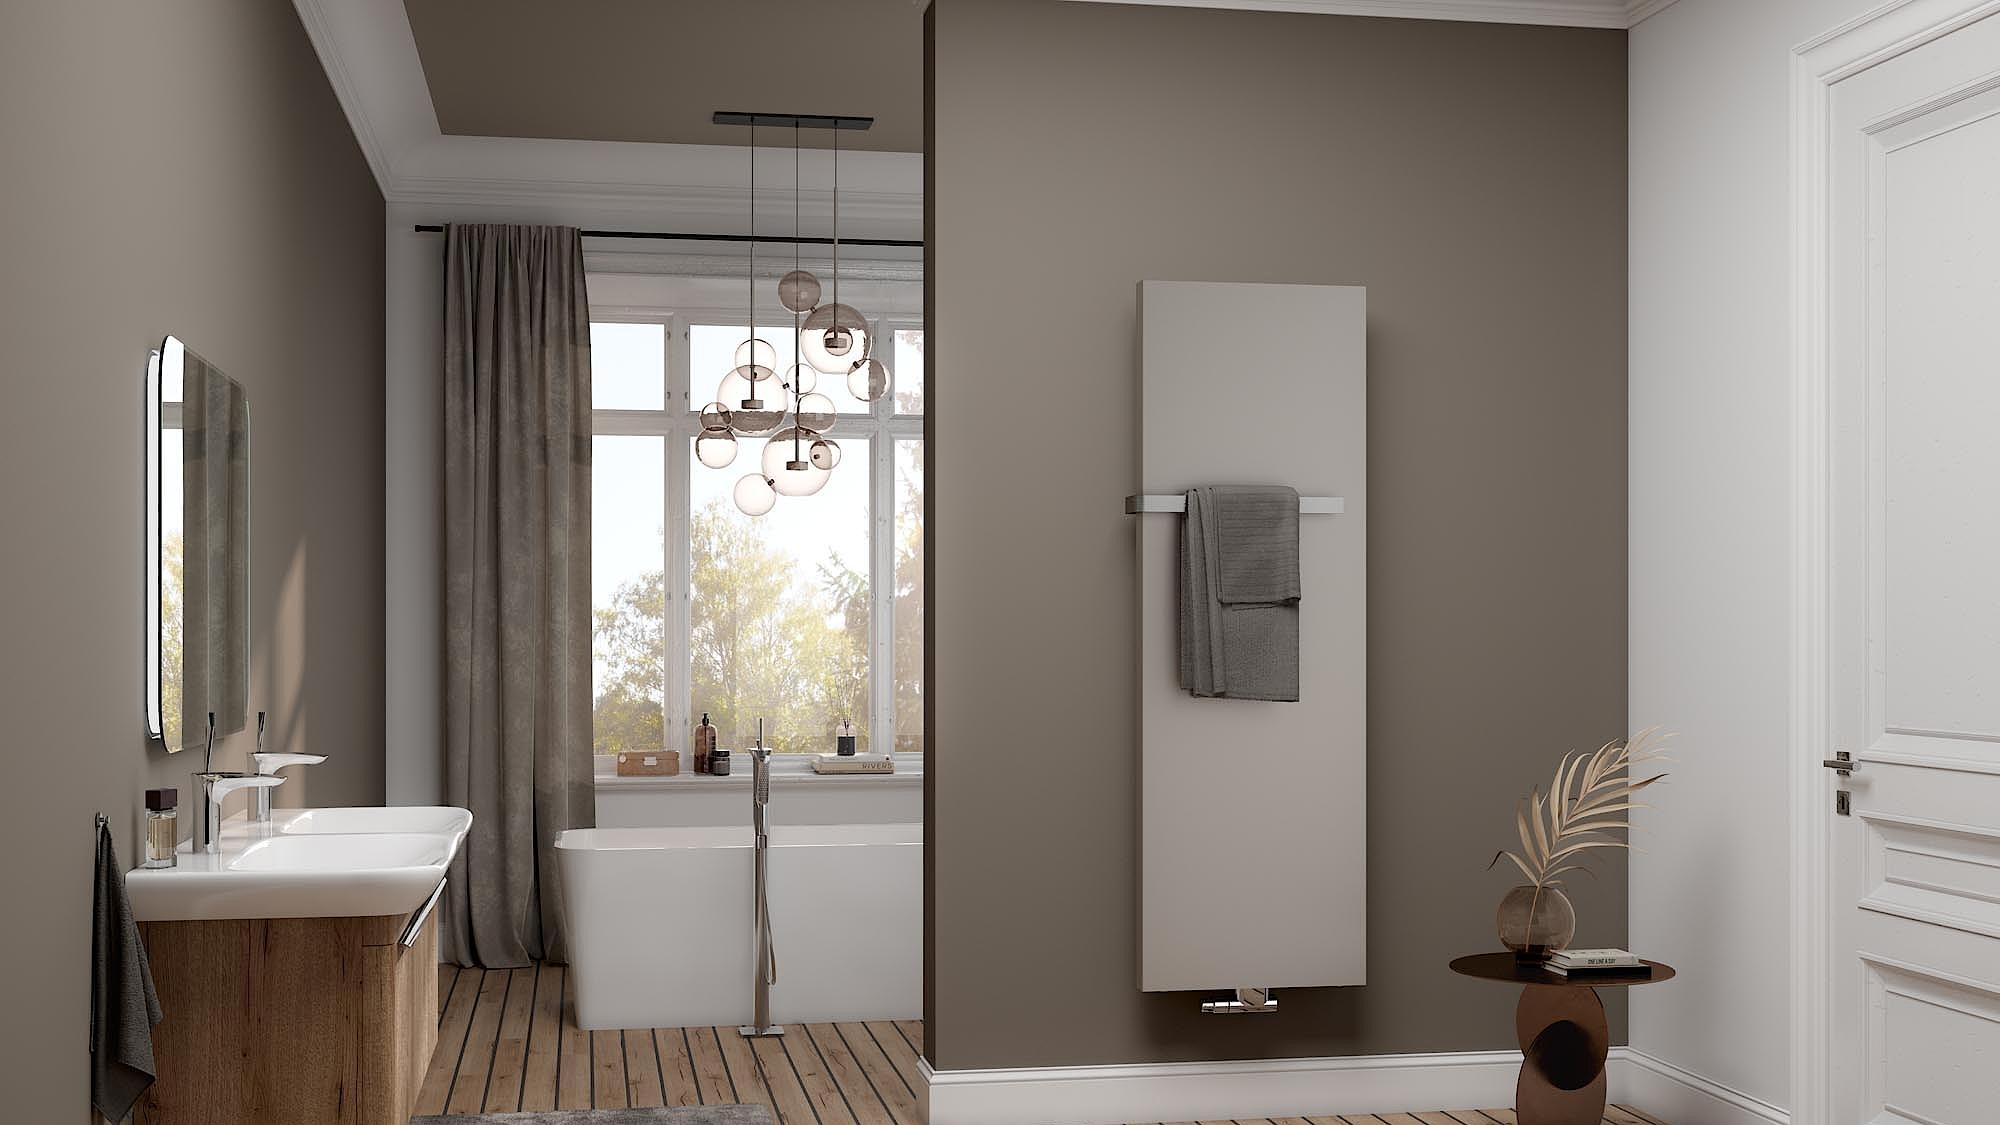 Kermi Rubeo design and bathroom radiators – pure aesthetics with clear, minimalist design lines. 